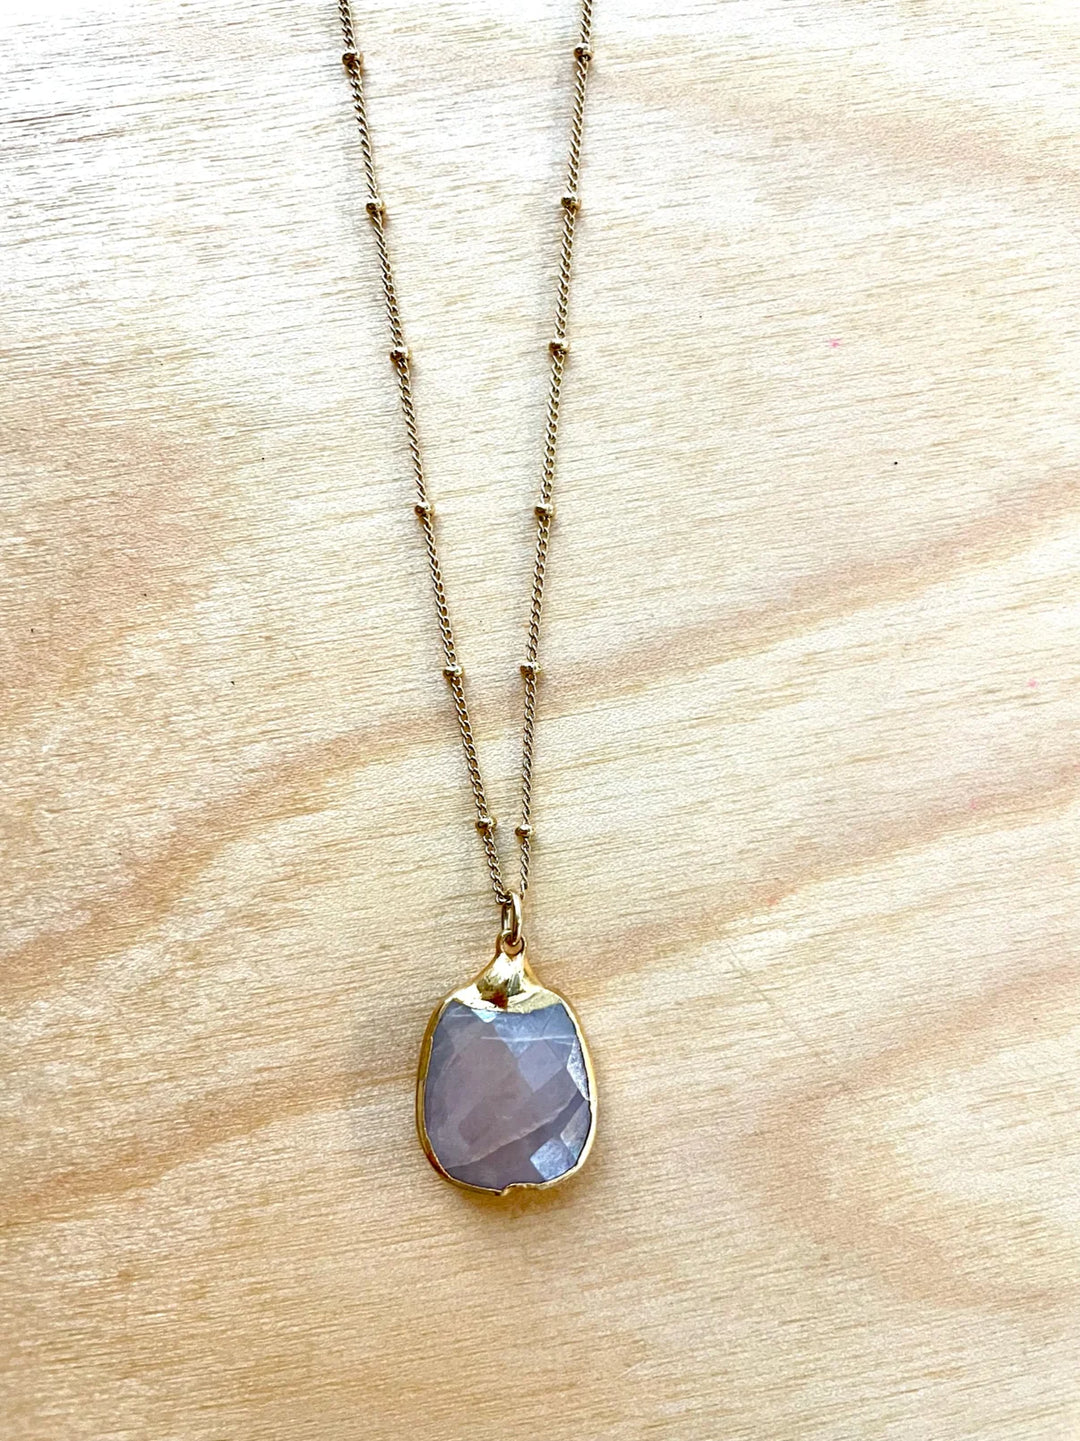 Necklace - Gemstones in 24KG - SALE!